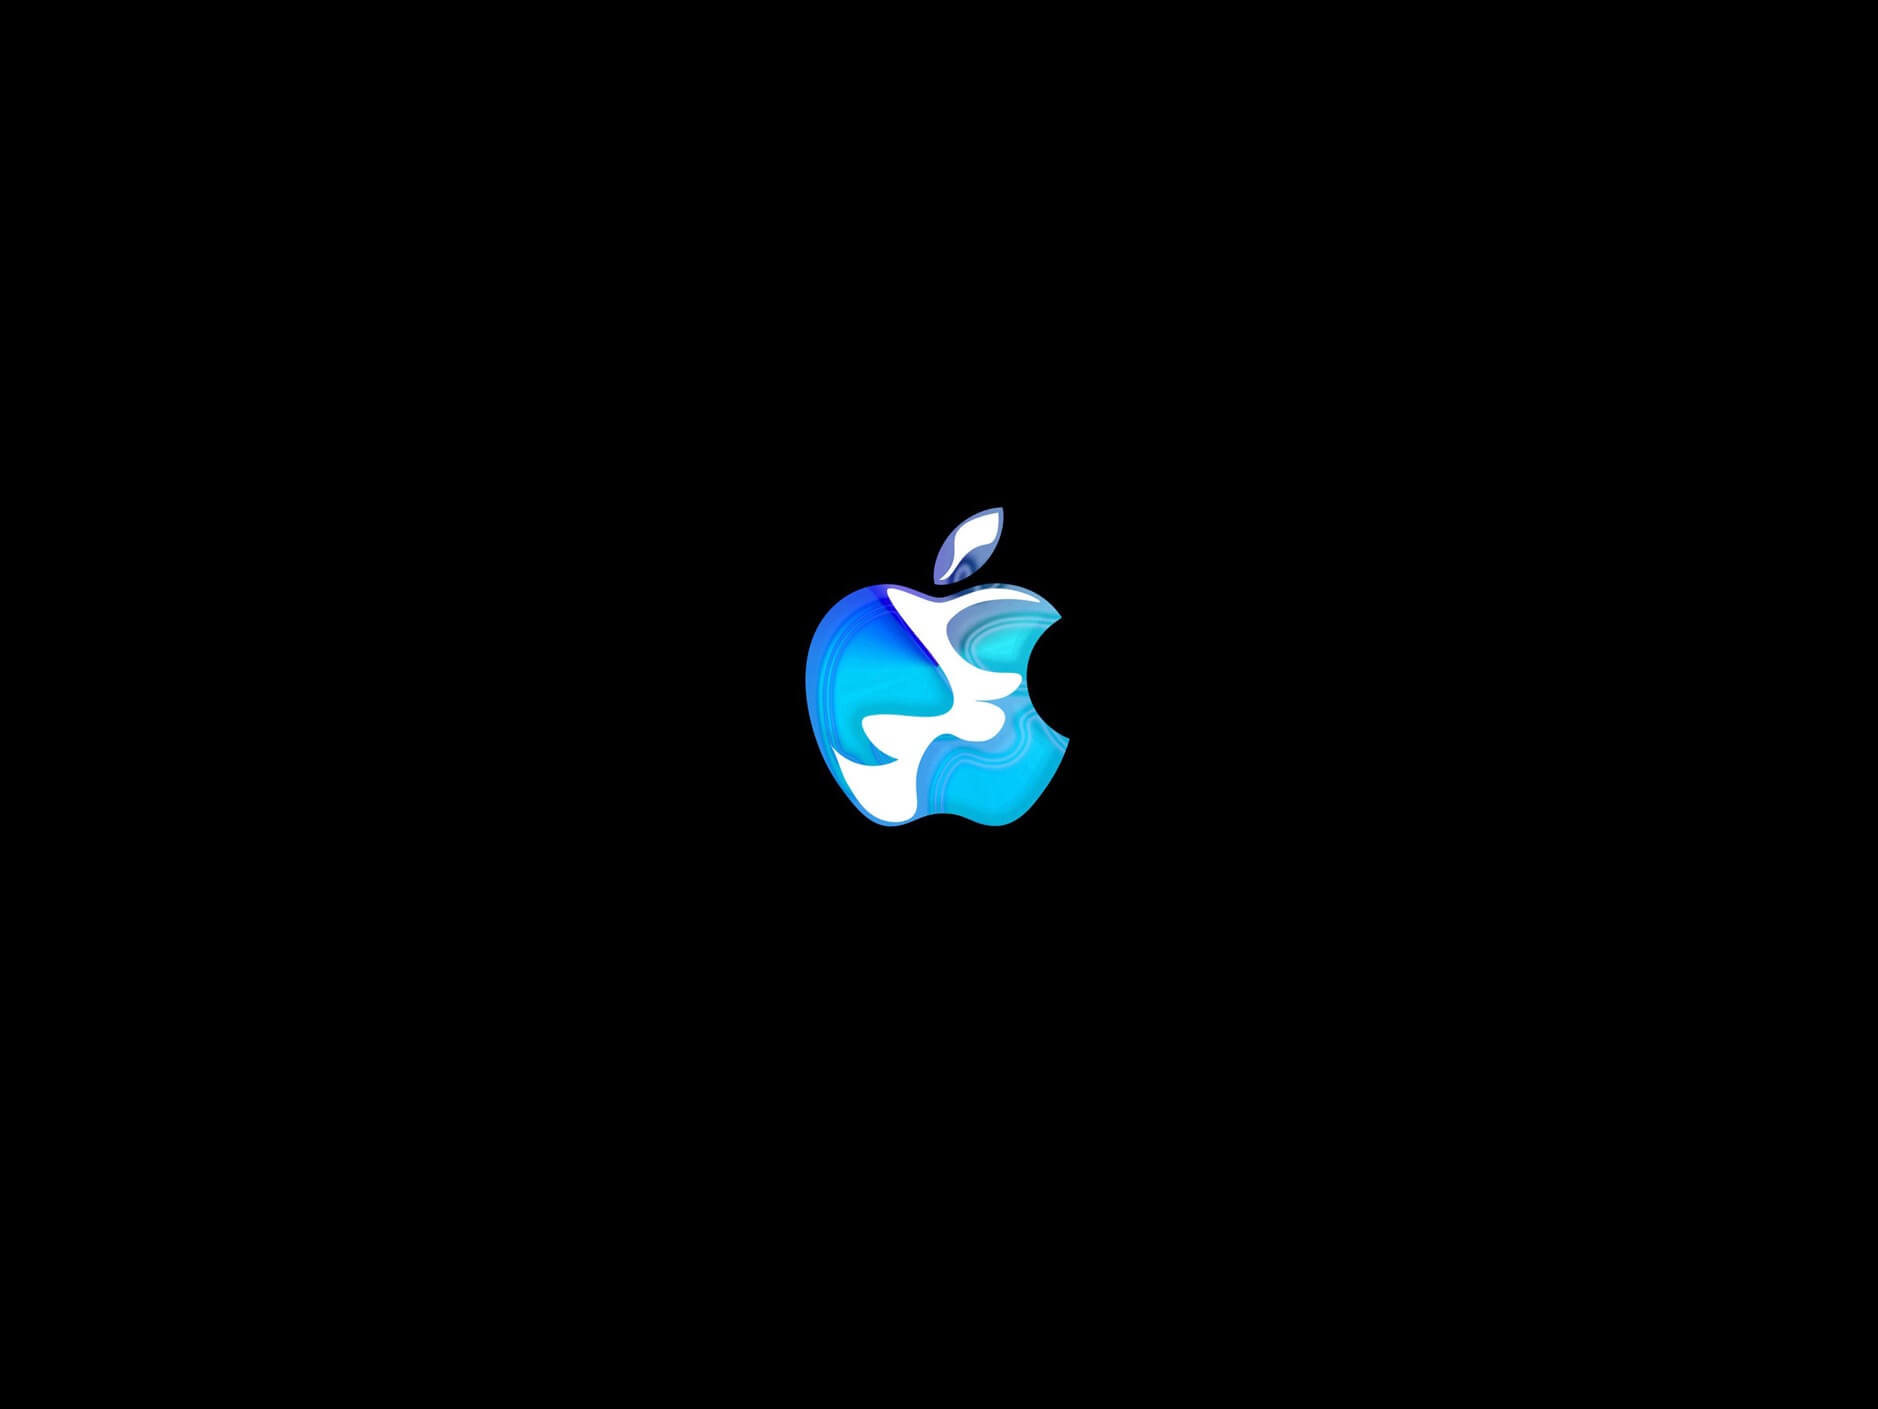 Alle Apple-Event-Logos als iPhone-Hintergrundbilder (via Shortcuts)